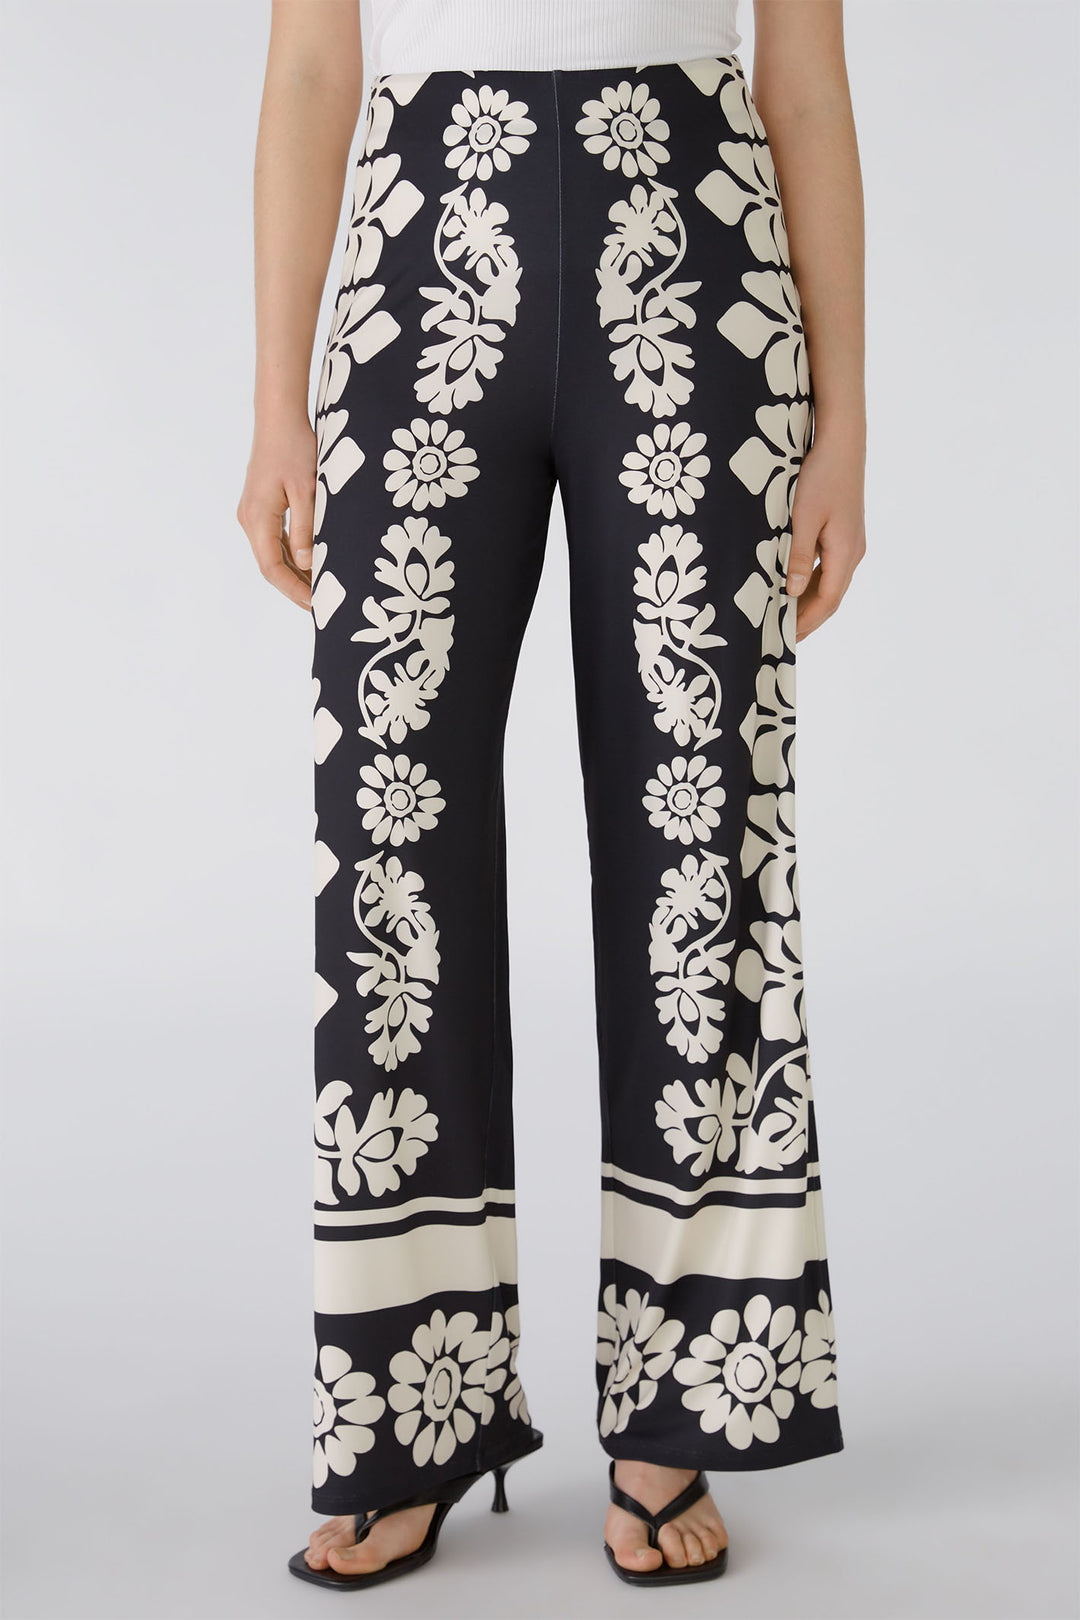 Oui 88258 Black Camel Marlene Block Flower Print Pull-On Trousers - Olivia Grace Fashion